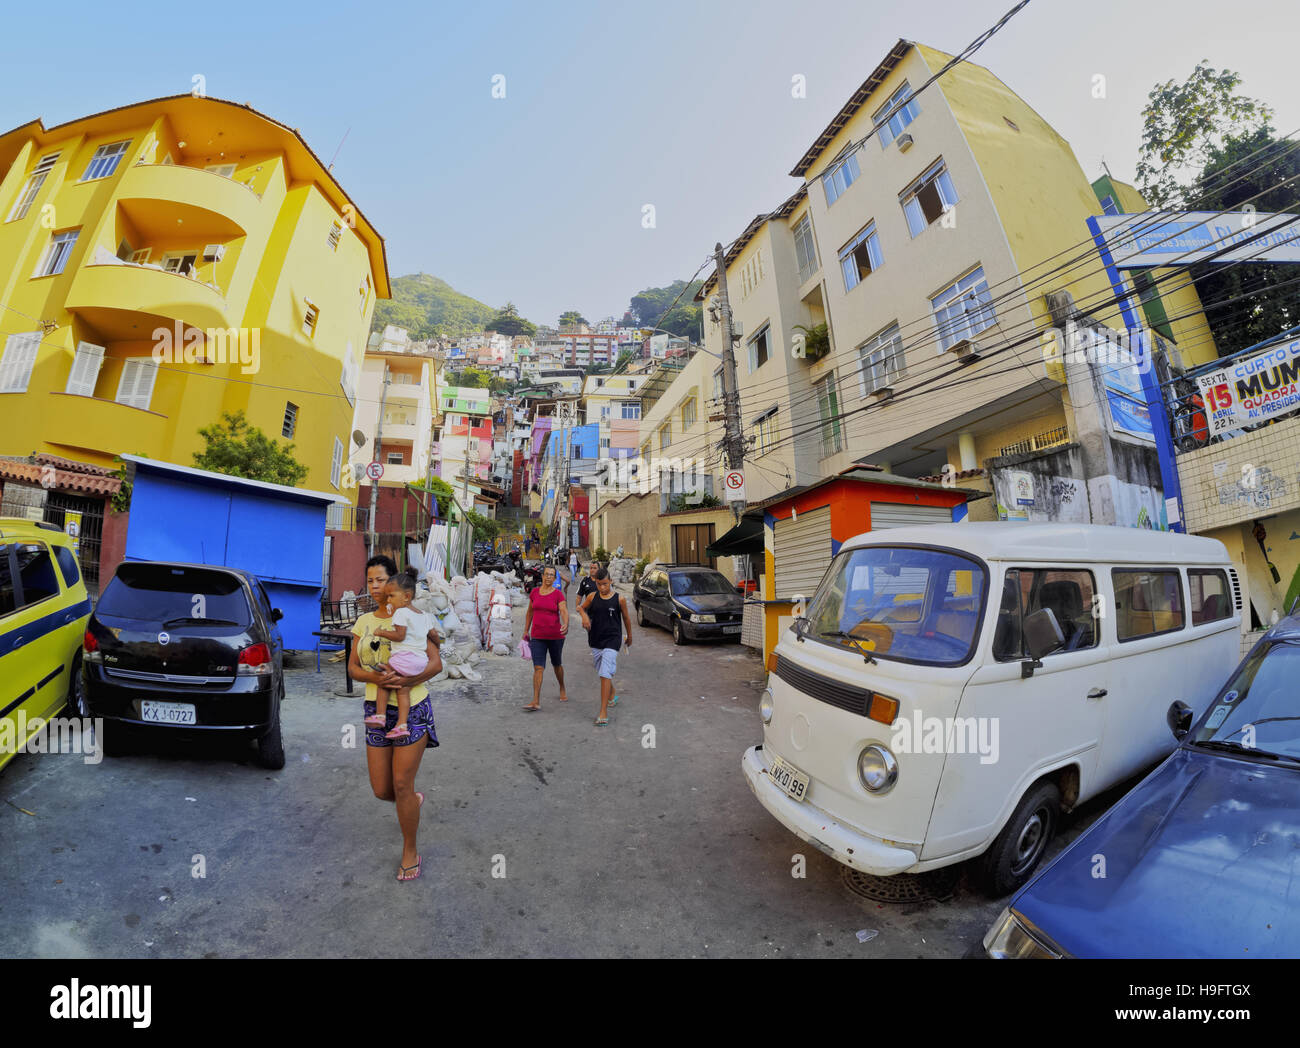 Brazil, City of Rio de Janeiro, View of the Favela Santa Marta. Stock Photo